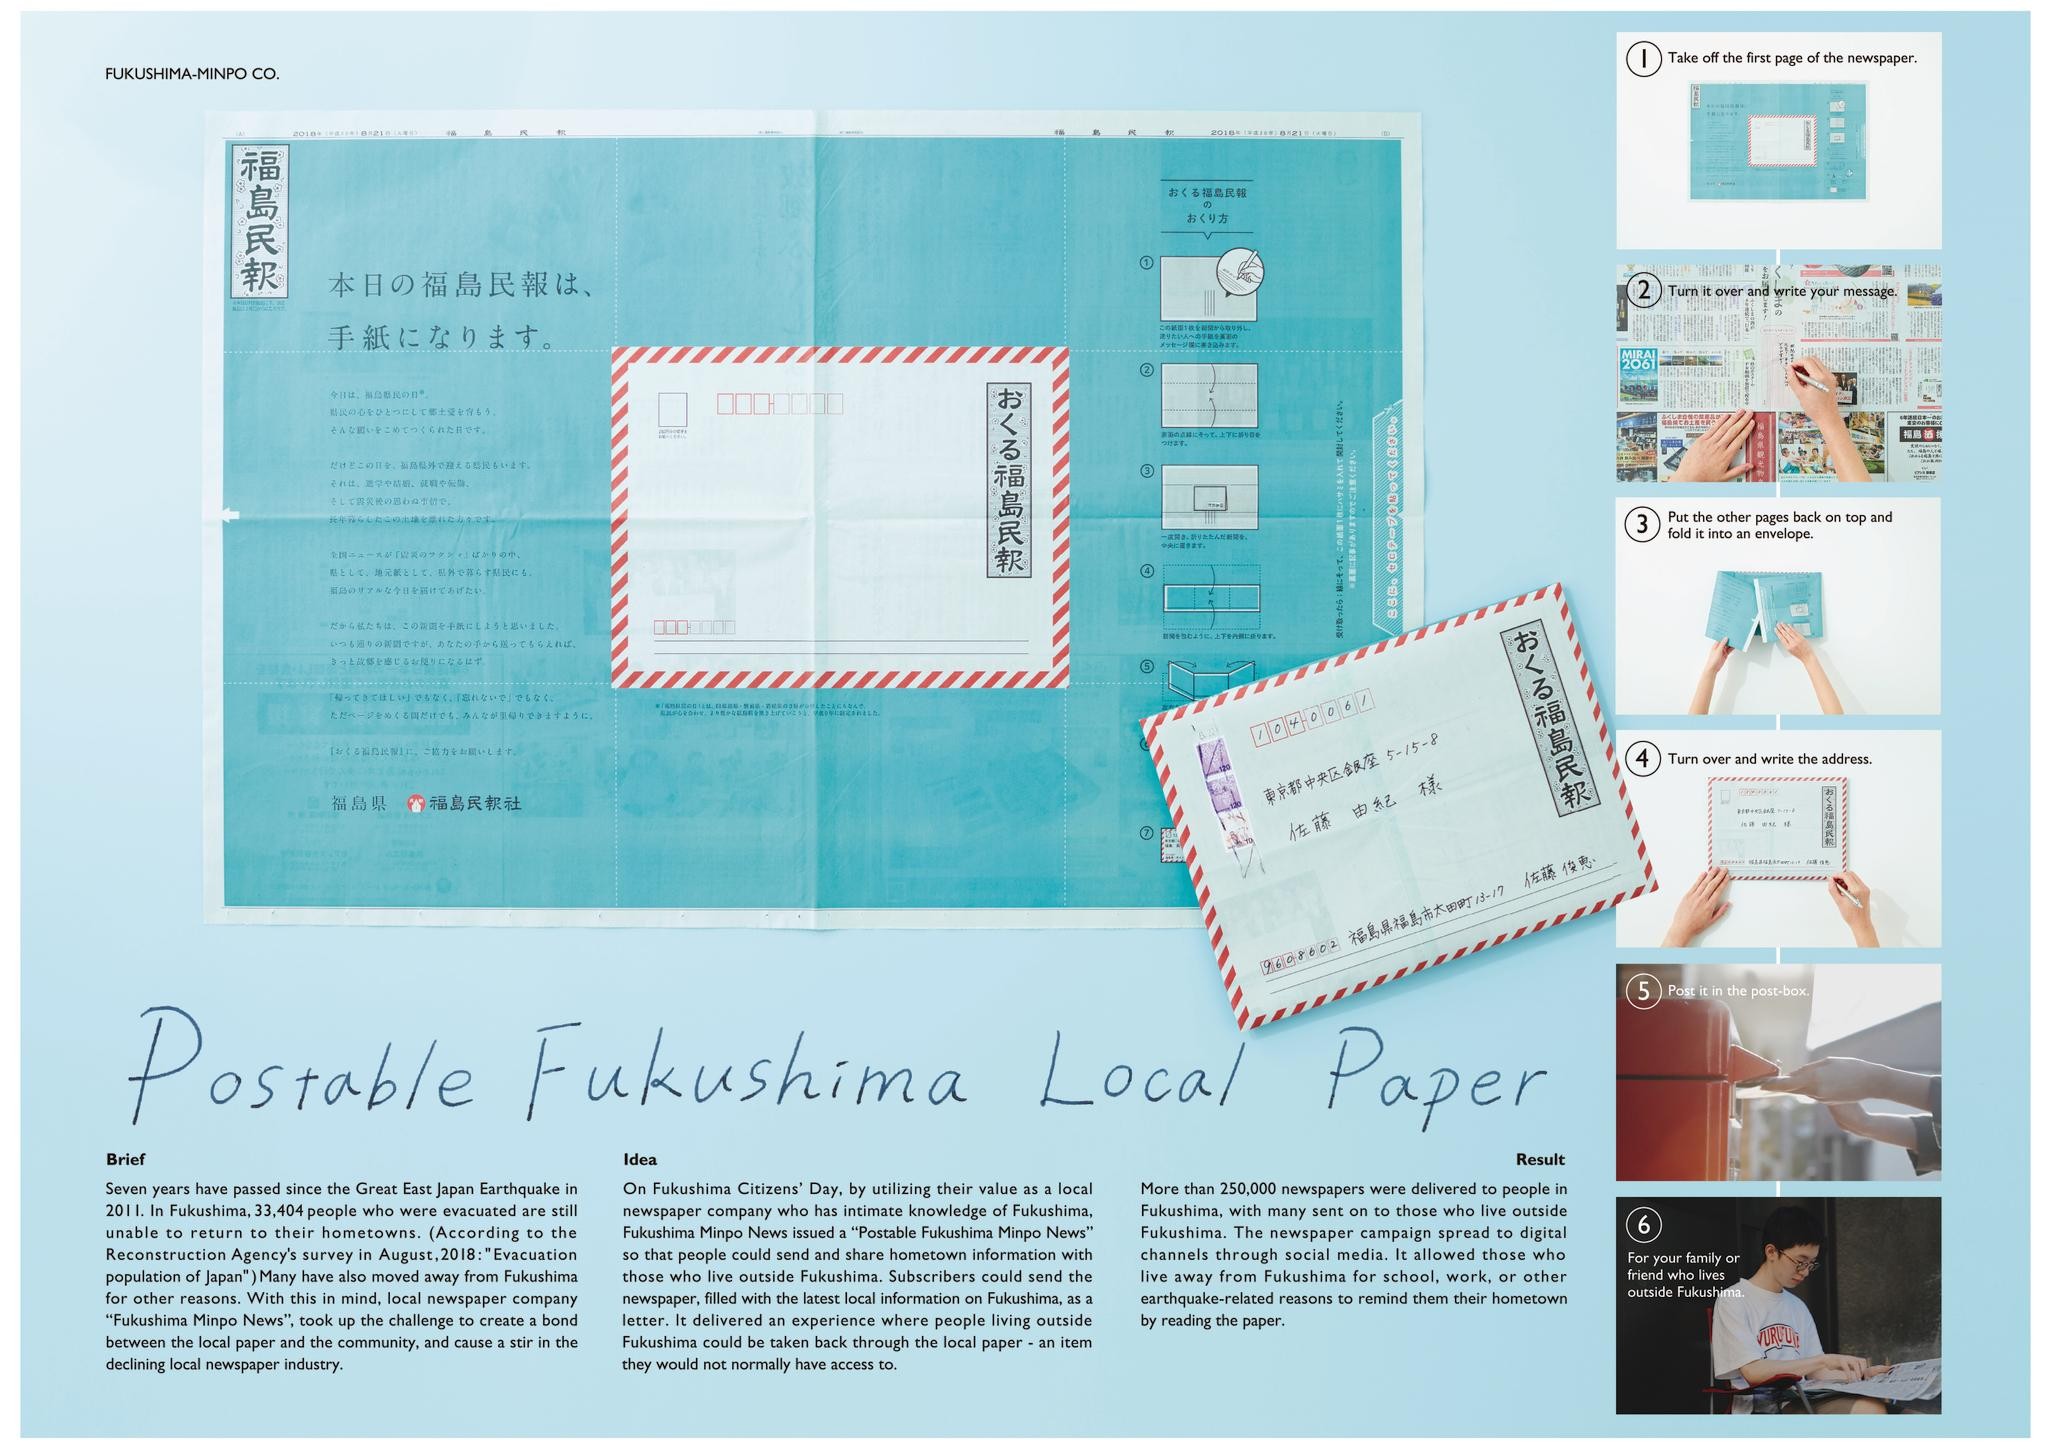 POSTABLE FUKUSHIMA LOCAL PAPER